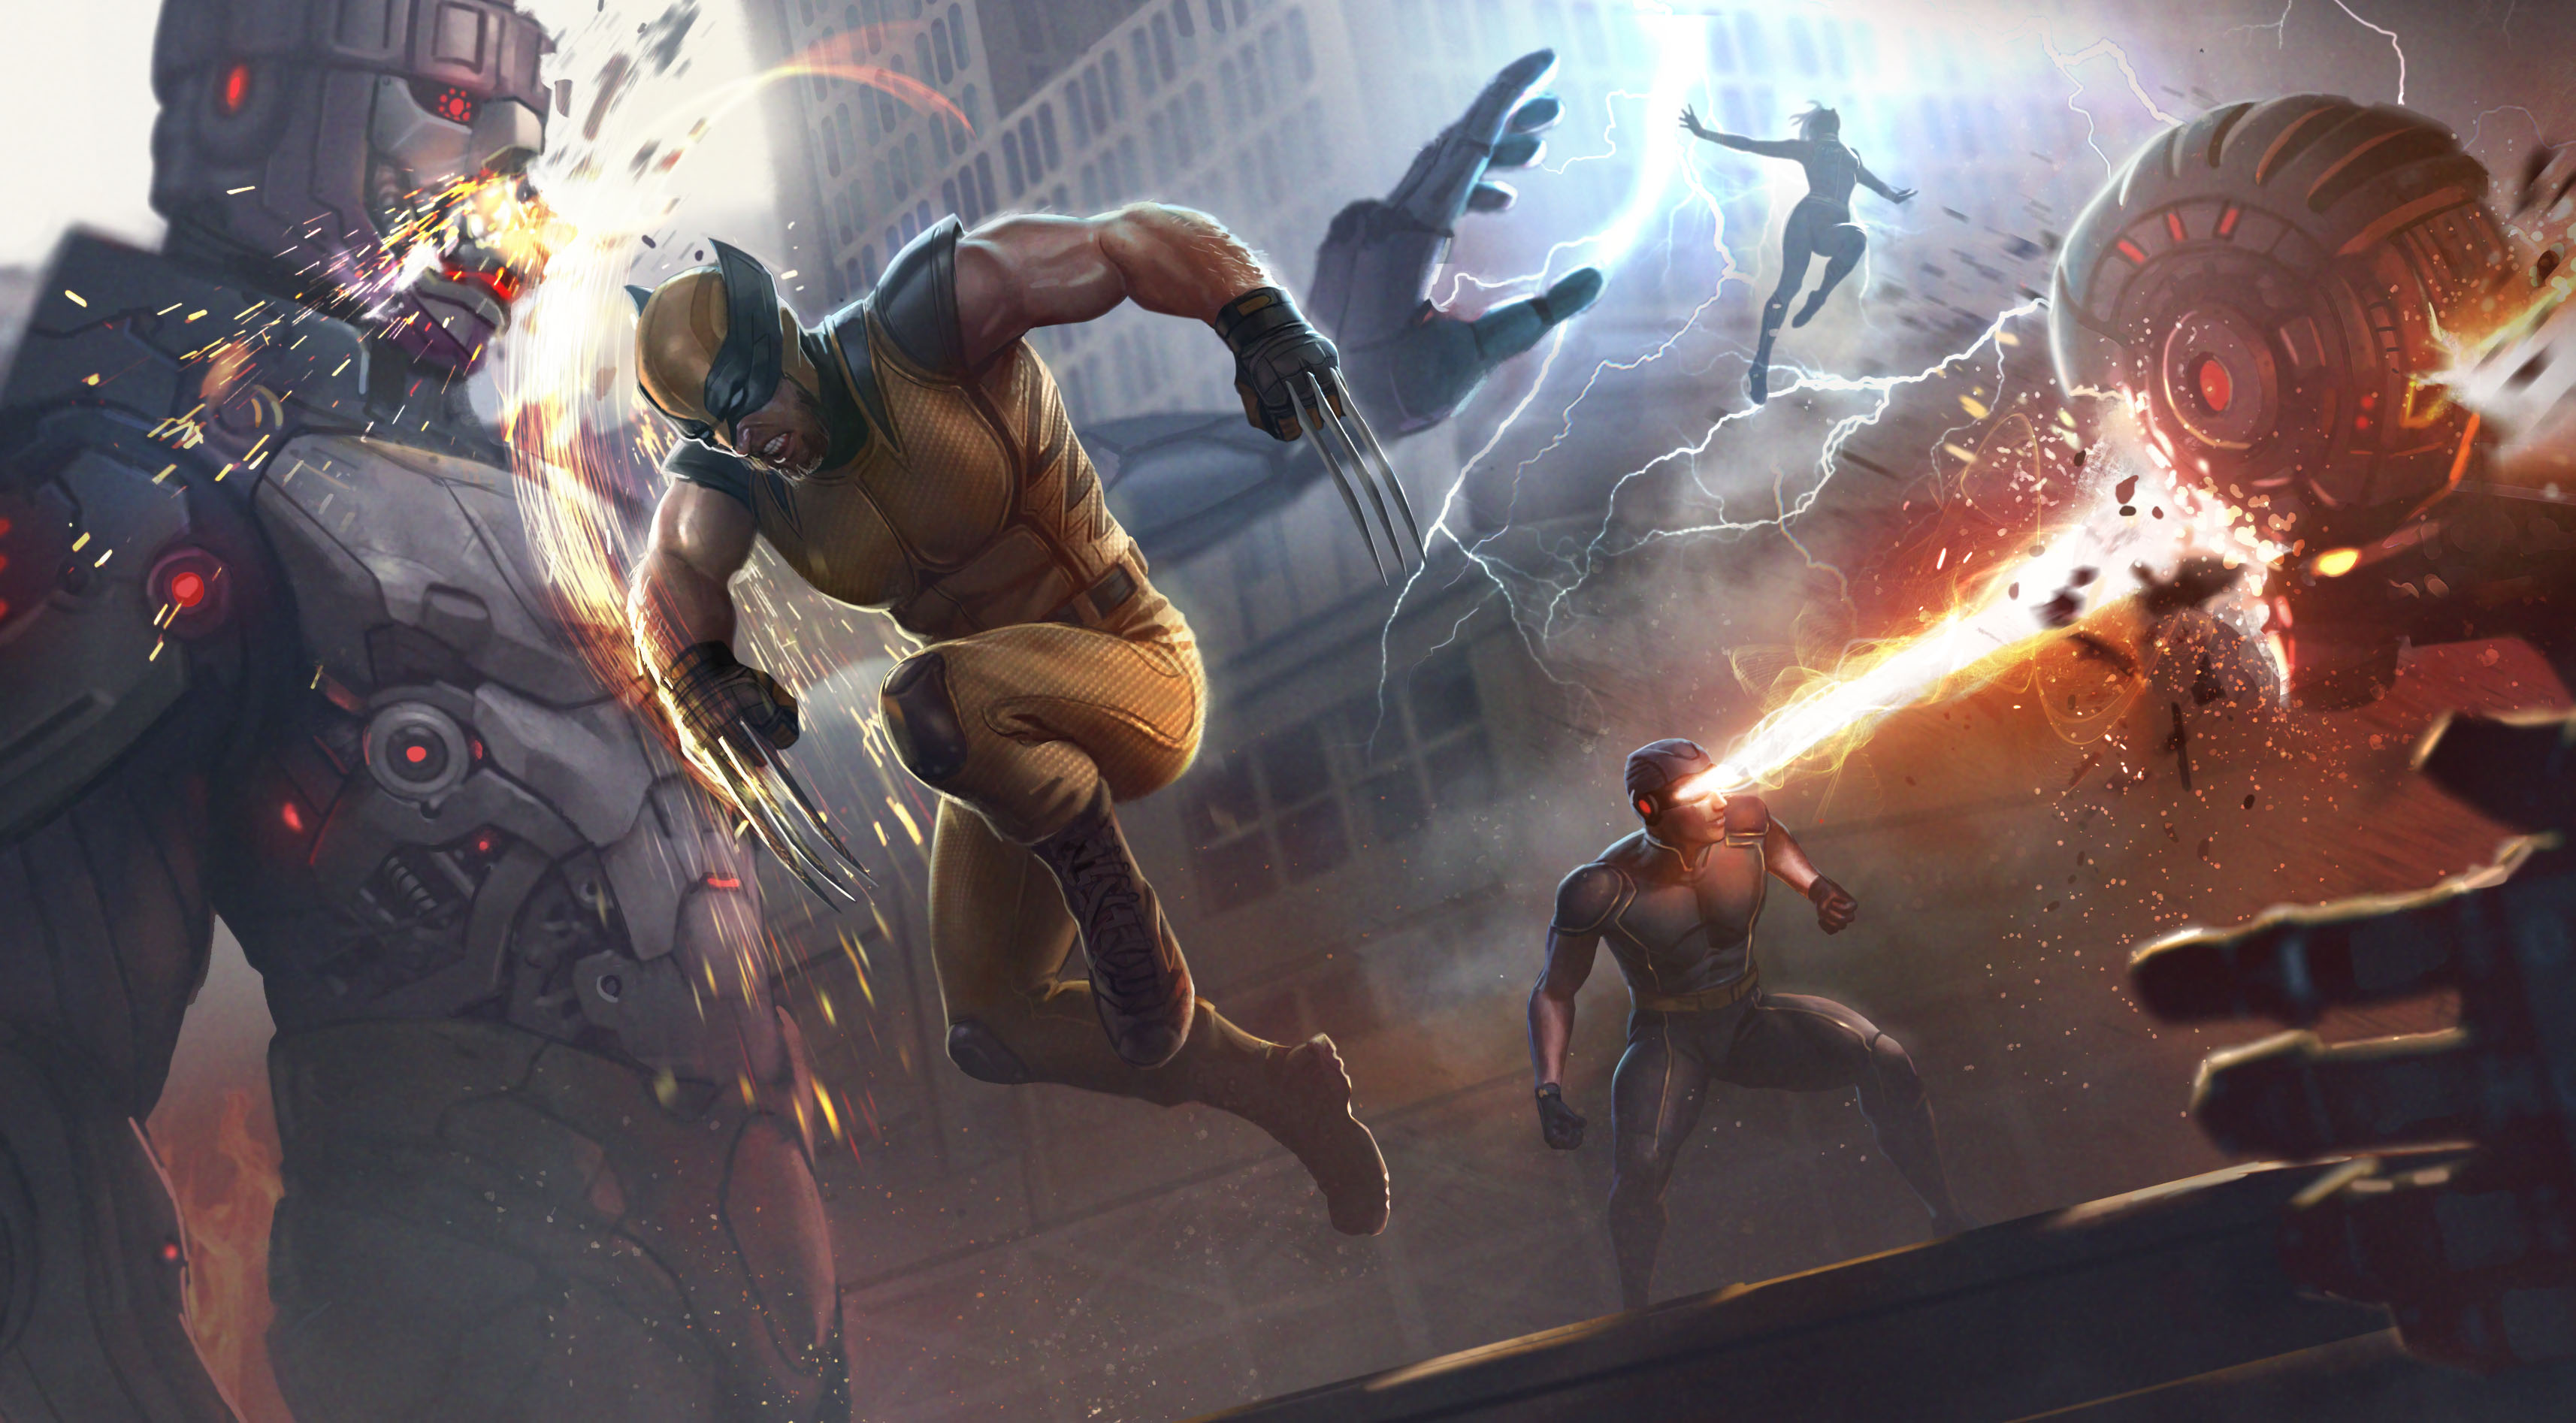 X-Mutants taking down some sentinels. by Jason Pastrana